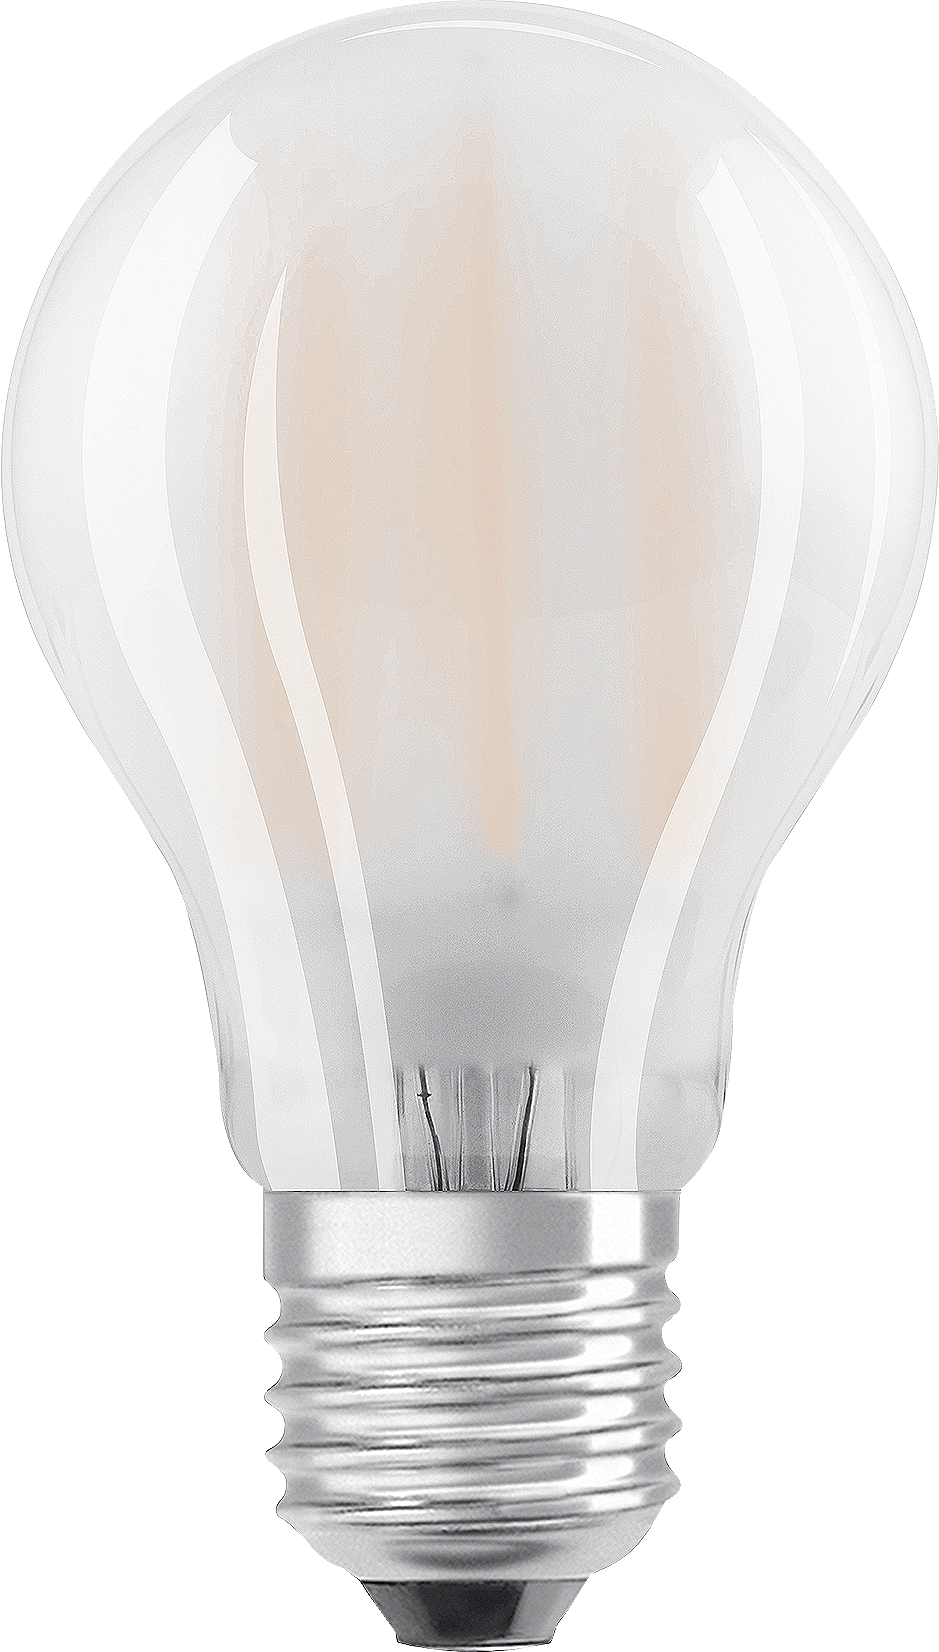 OSRAM LED-Lampe Retrofit Classic A E27, 7.0W, 806lm, warmweiss - Lampen, Leuchten